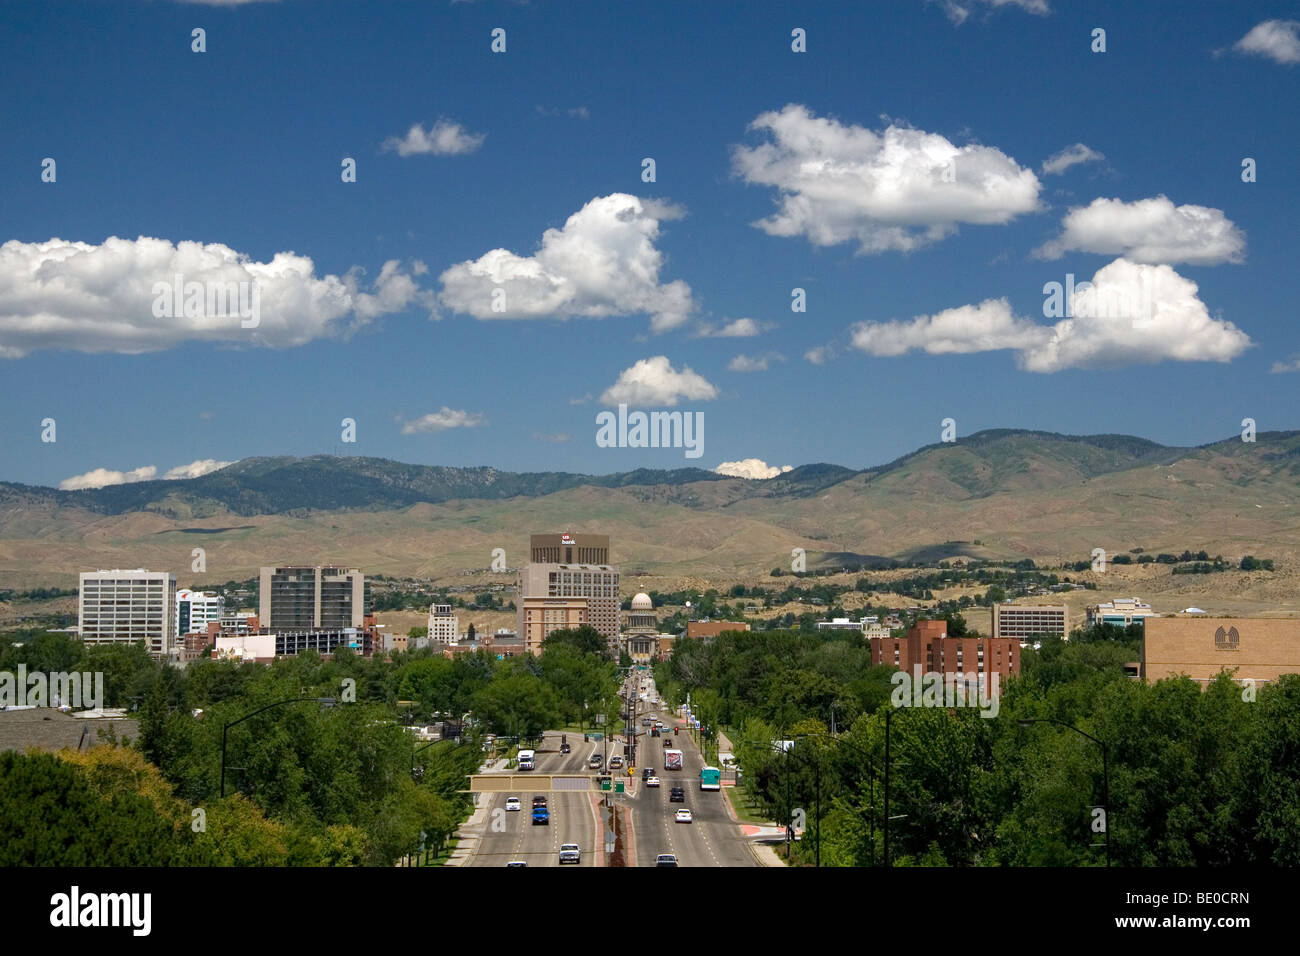 The state capital city of Boise, Idaho, USA. Stock Photo